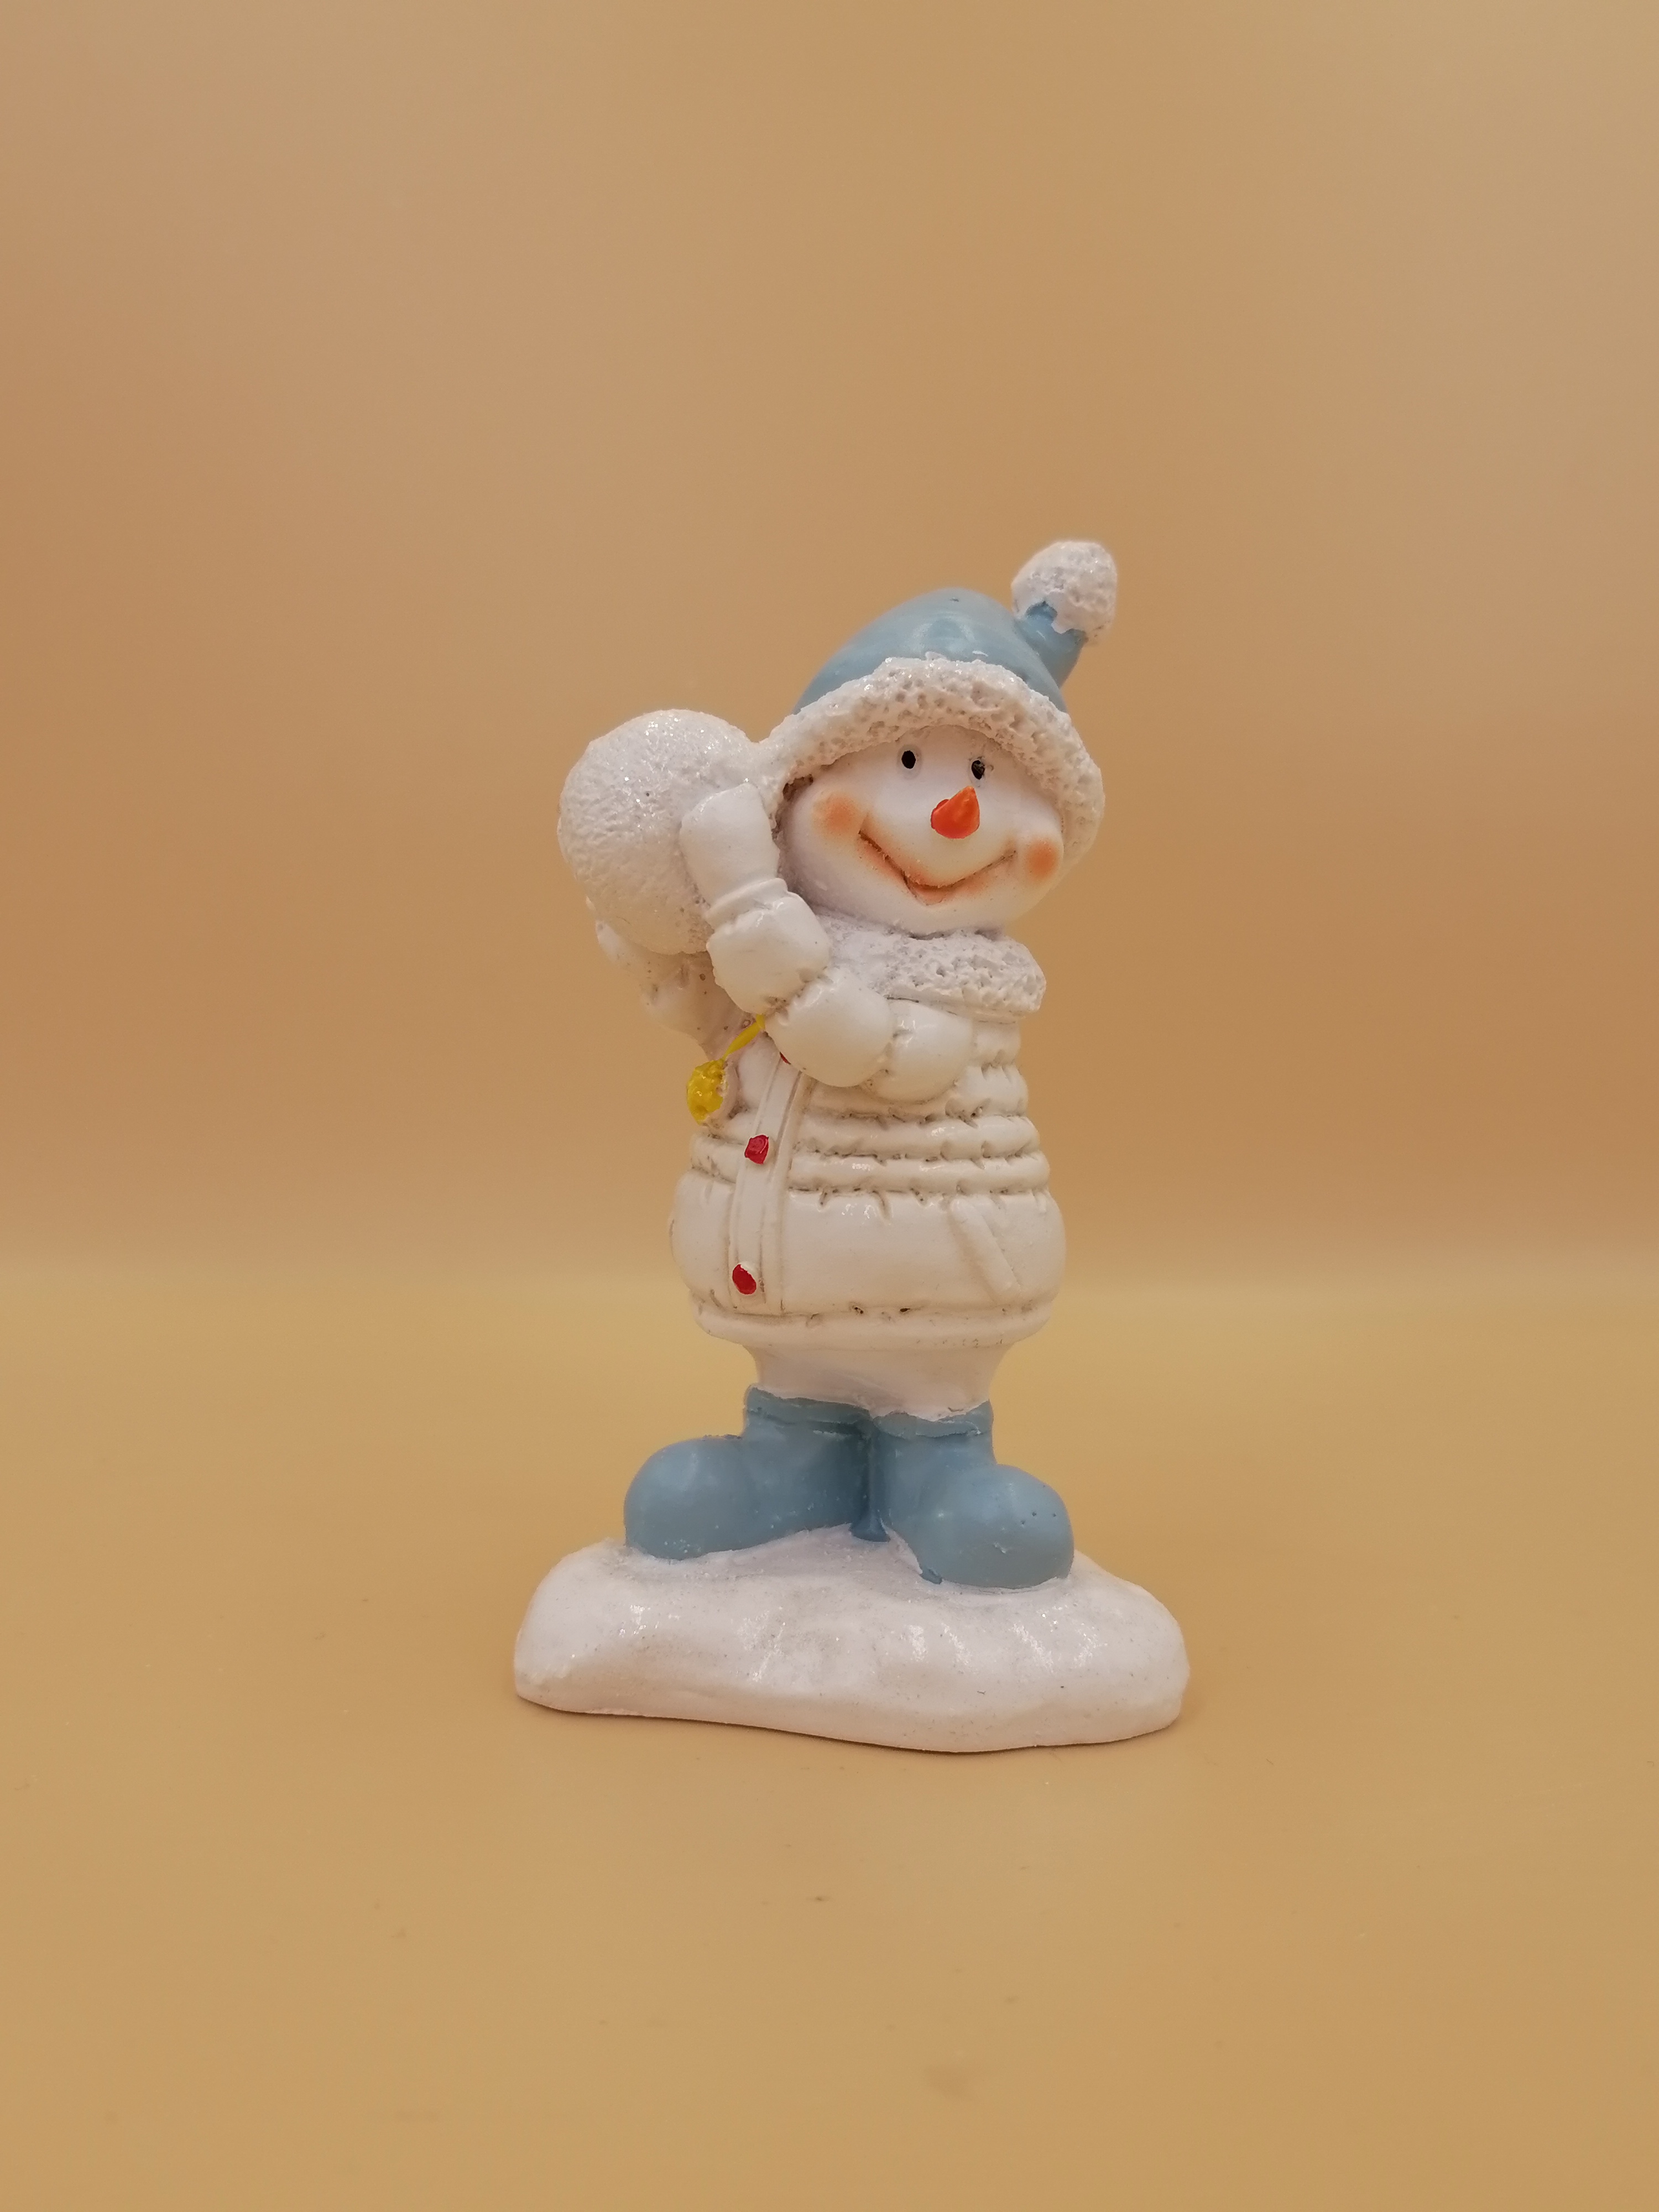 Фигура декоративная Снеговик со снежком L6.5W5H10.5